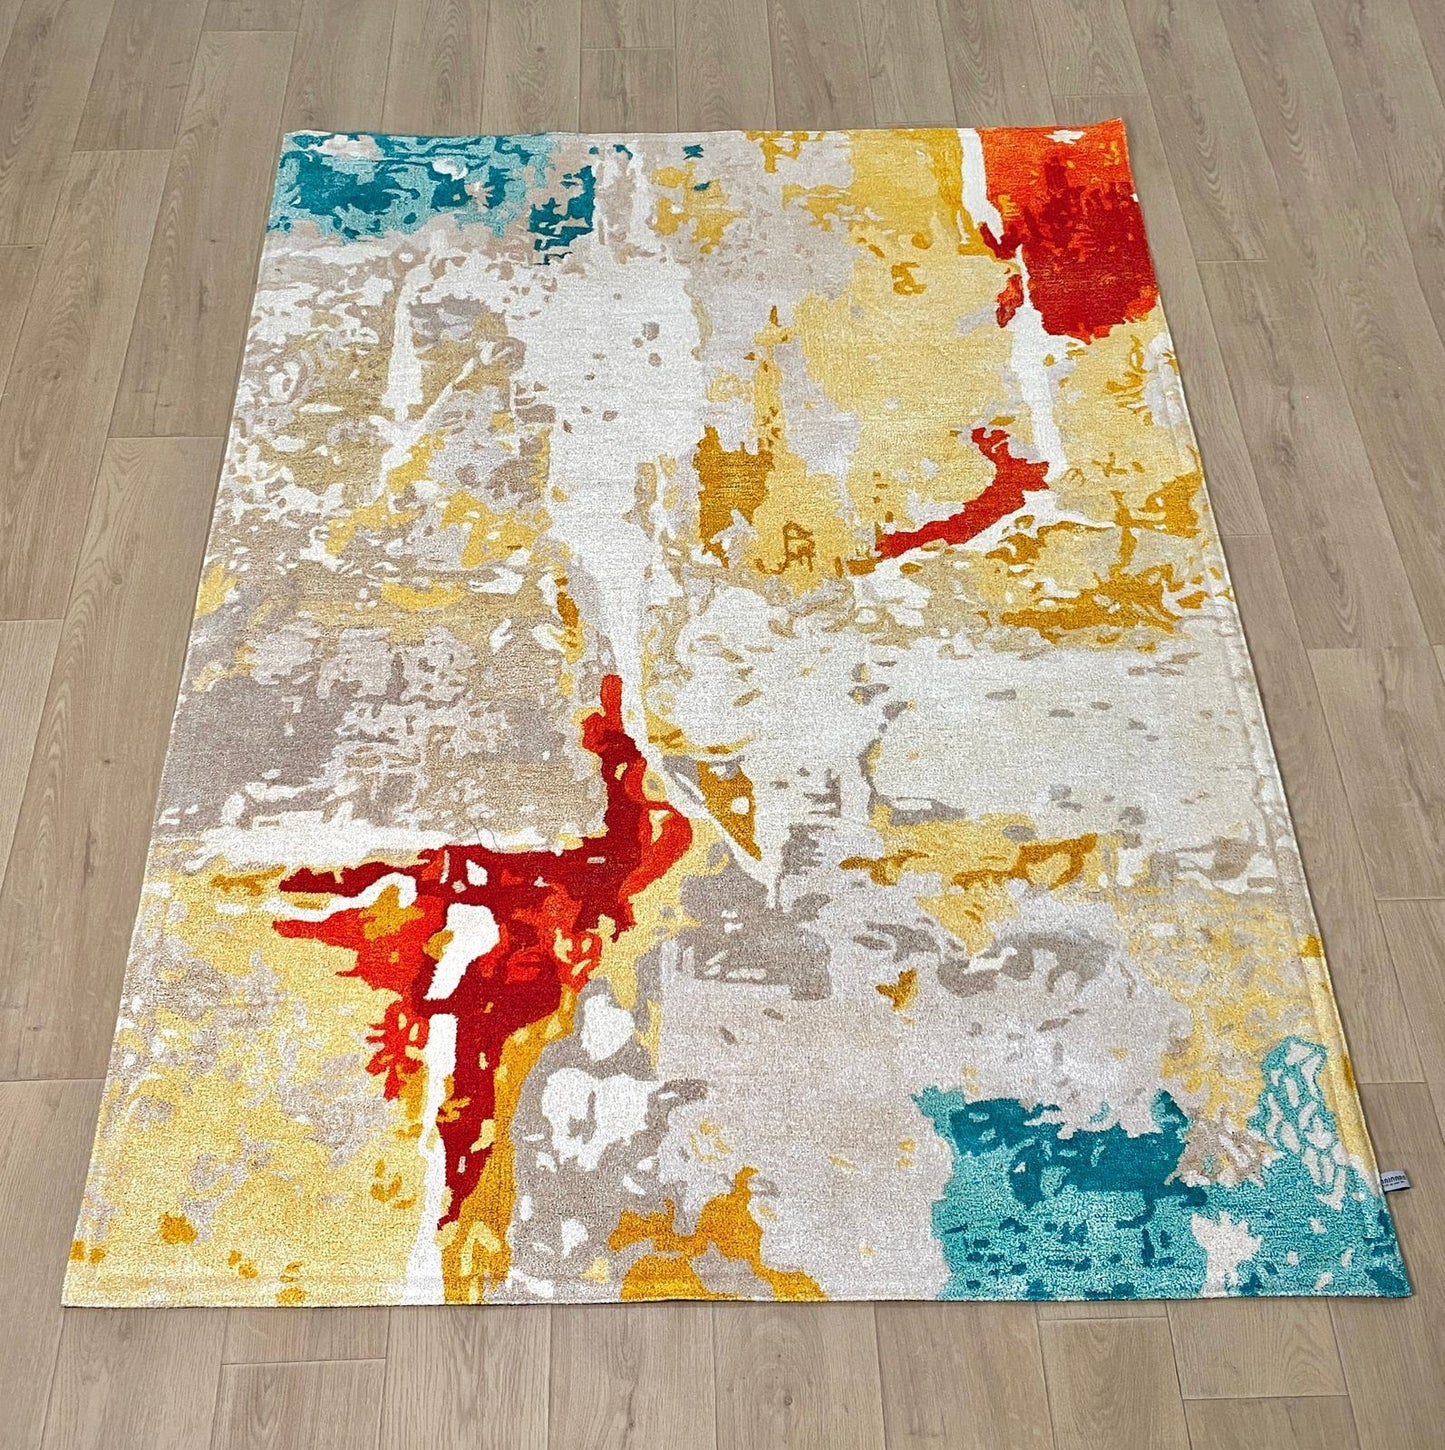 Karpet Abstrak (YL-A-0015) - Yellow,Cream,Orange